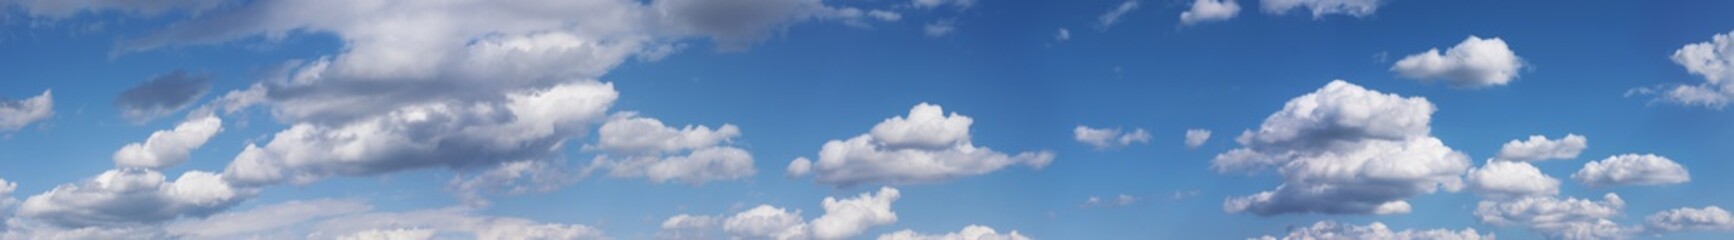 Obraz premium Niebo z chmurami